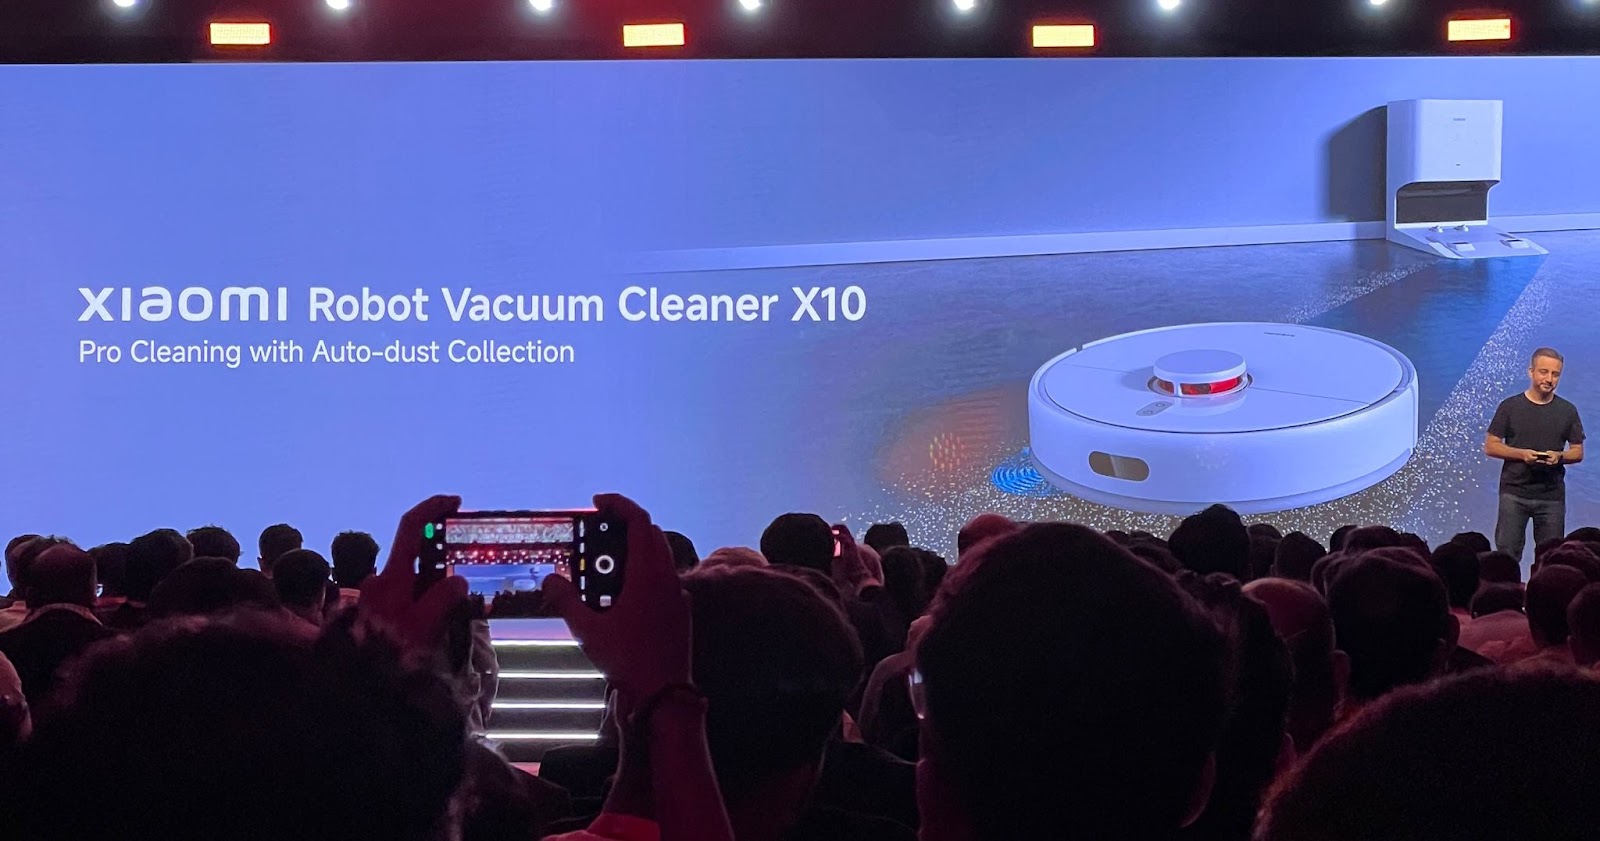 Xiaomi Vaccum Cleaner X10
